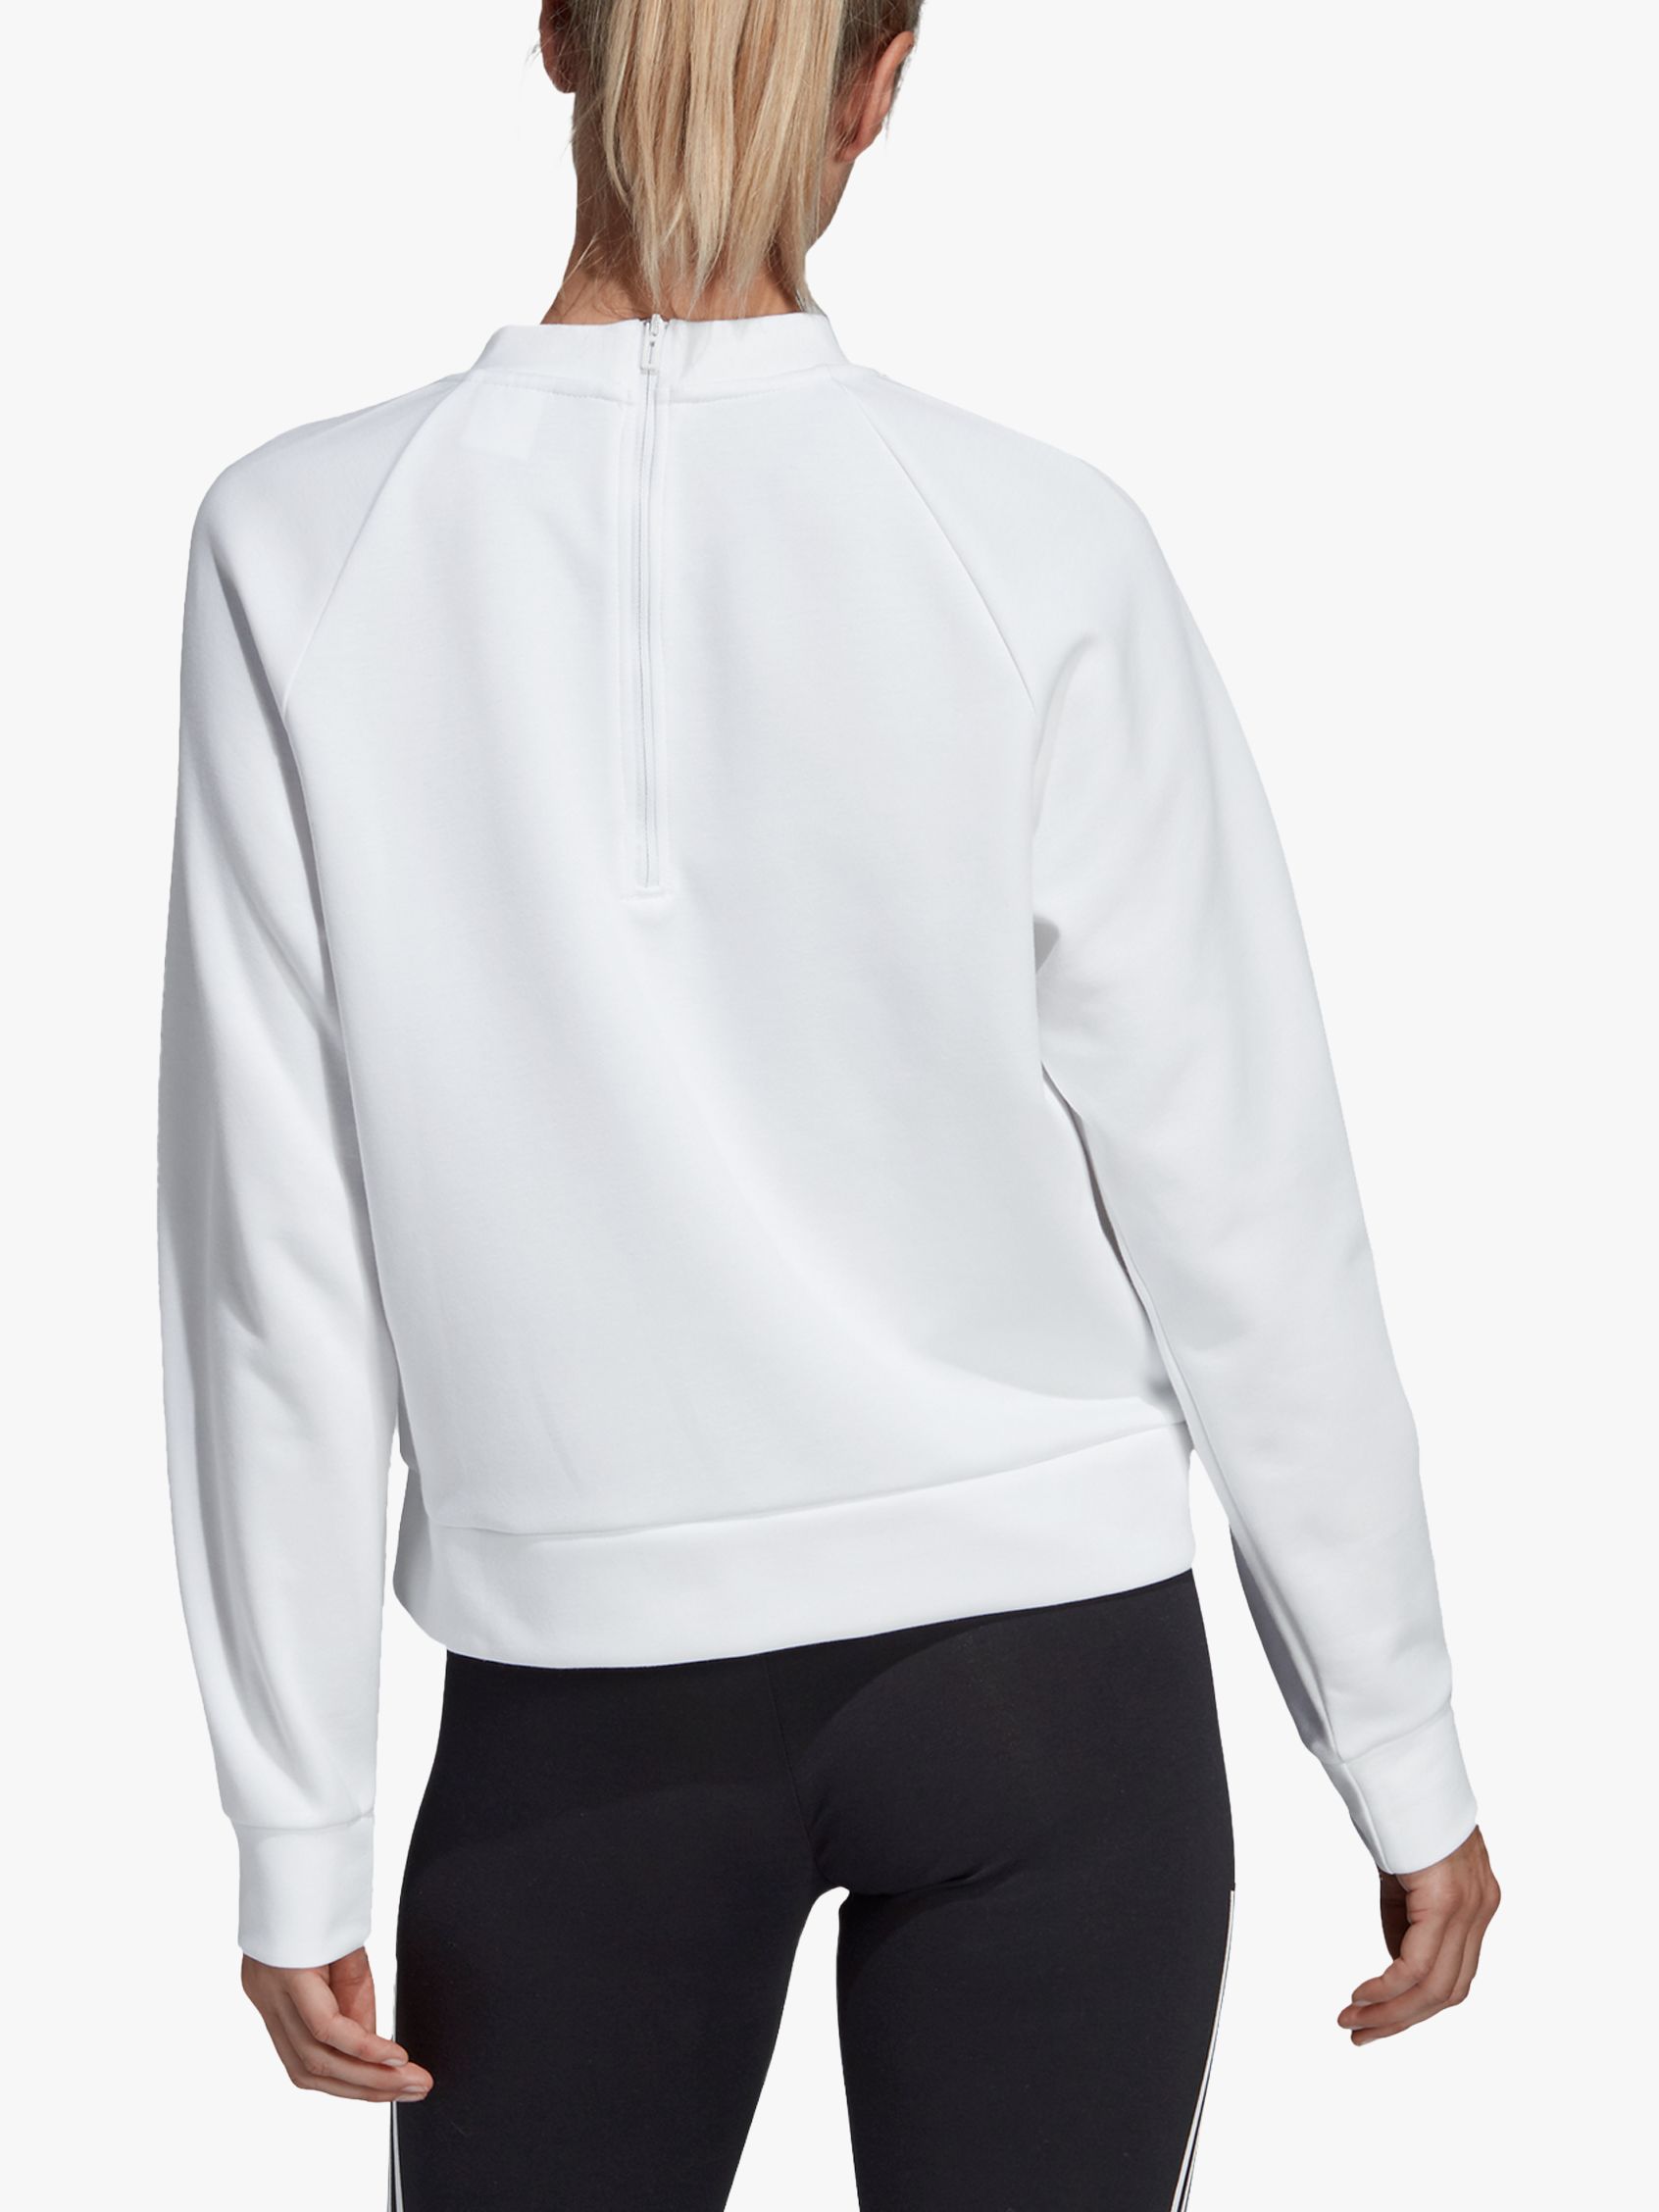 adidas ID Glory Crew Neck Sweatshirt, White at John Lewis & Partners